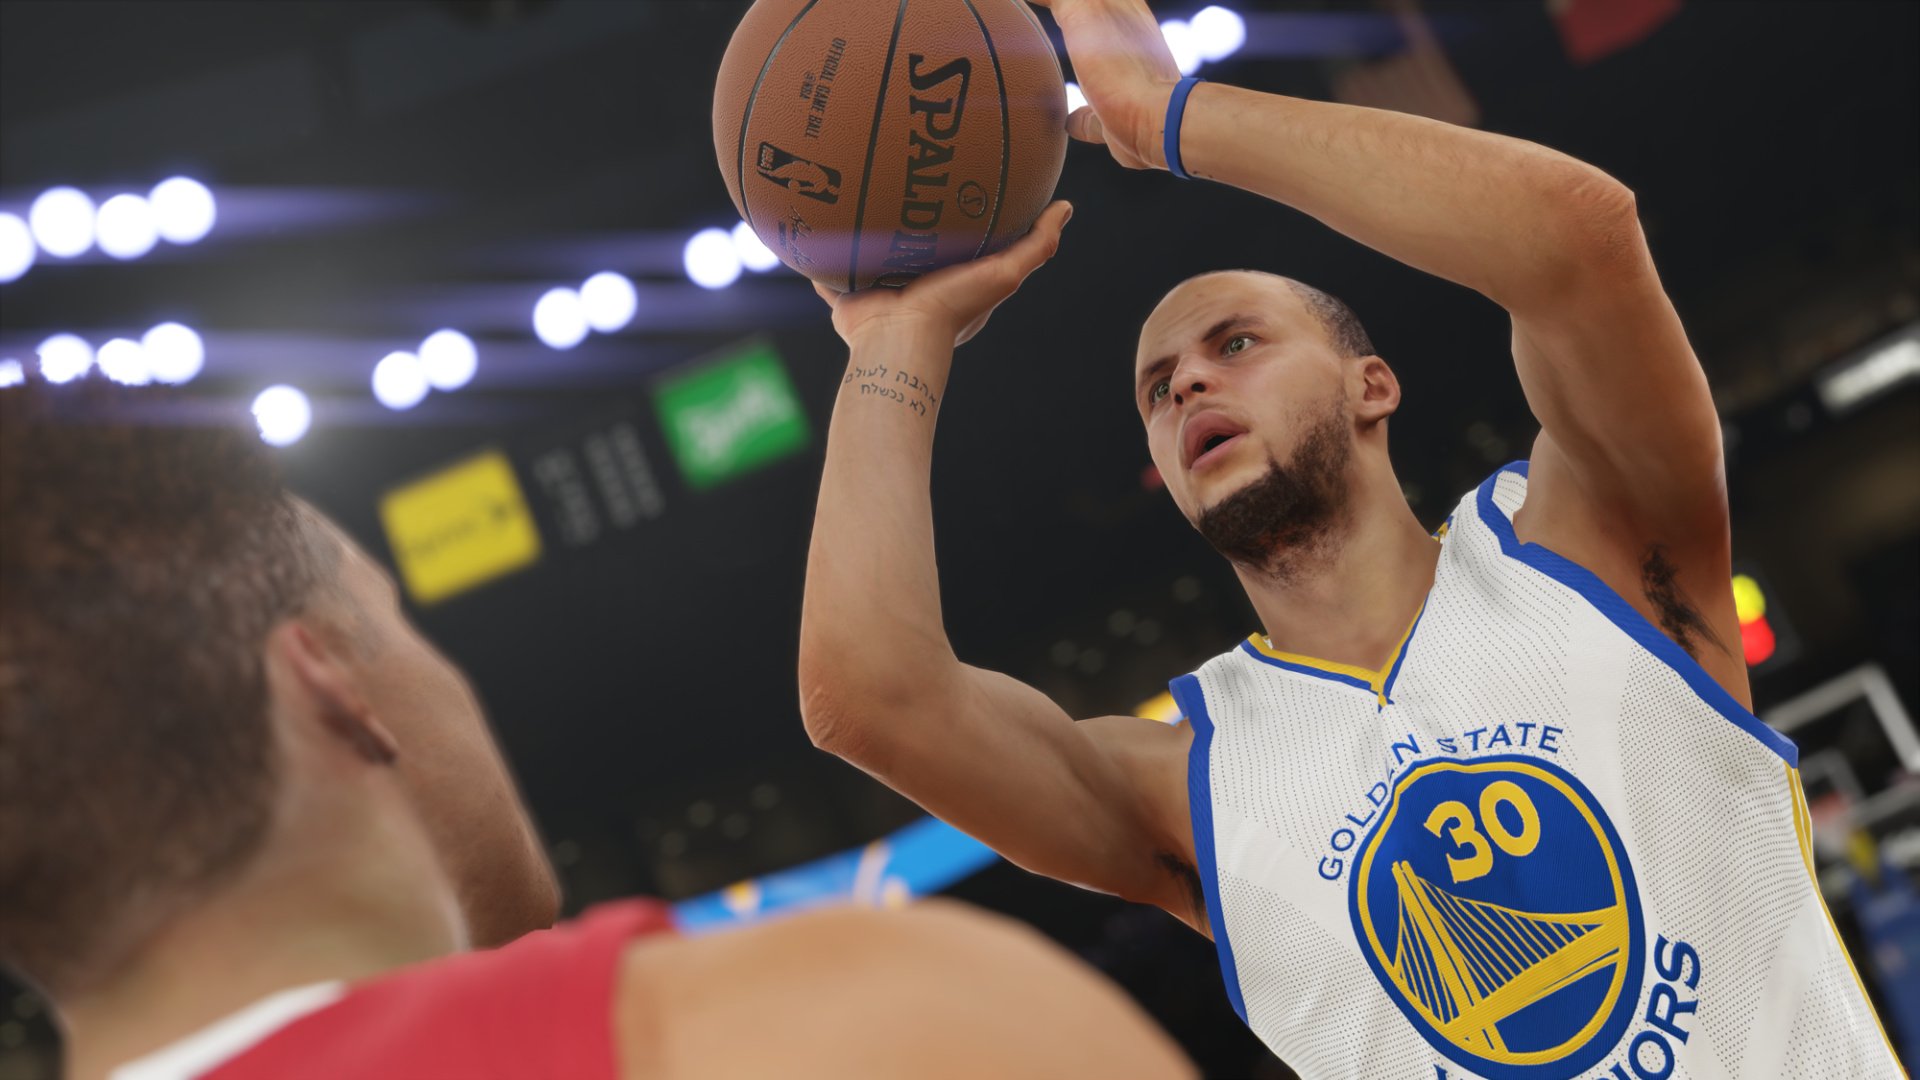 NBA 2K15 (PS3 / PlayStation 3) Game Profile | News, Reviews, Videos